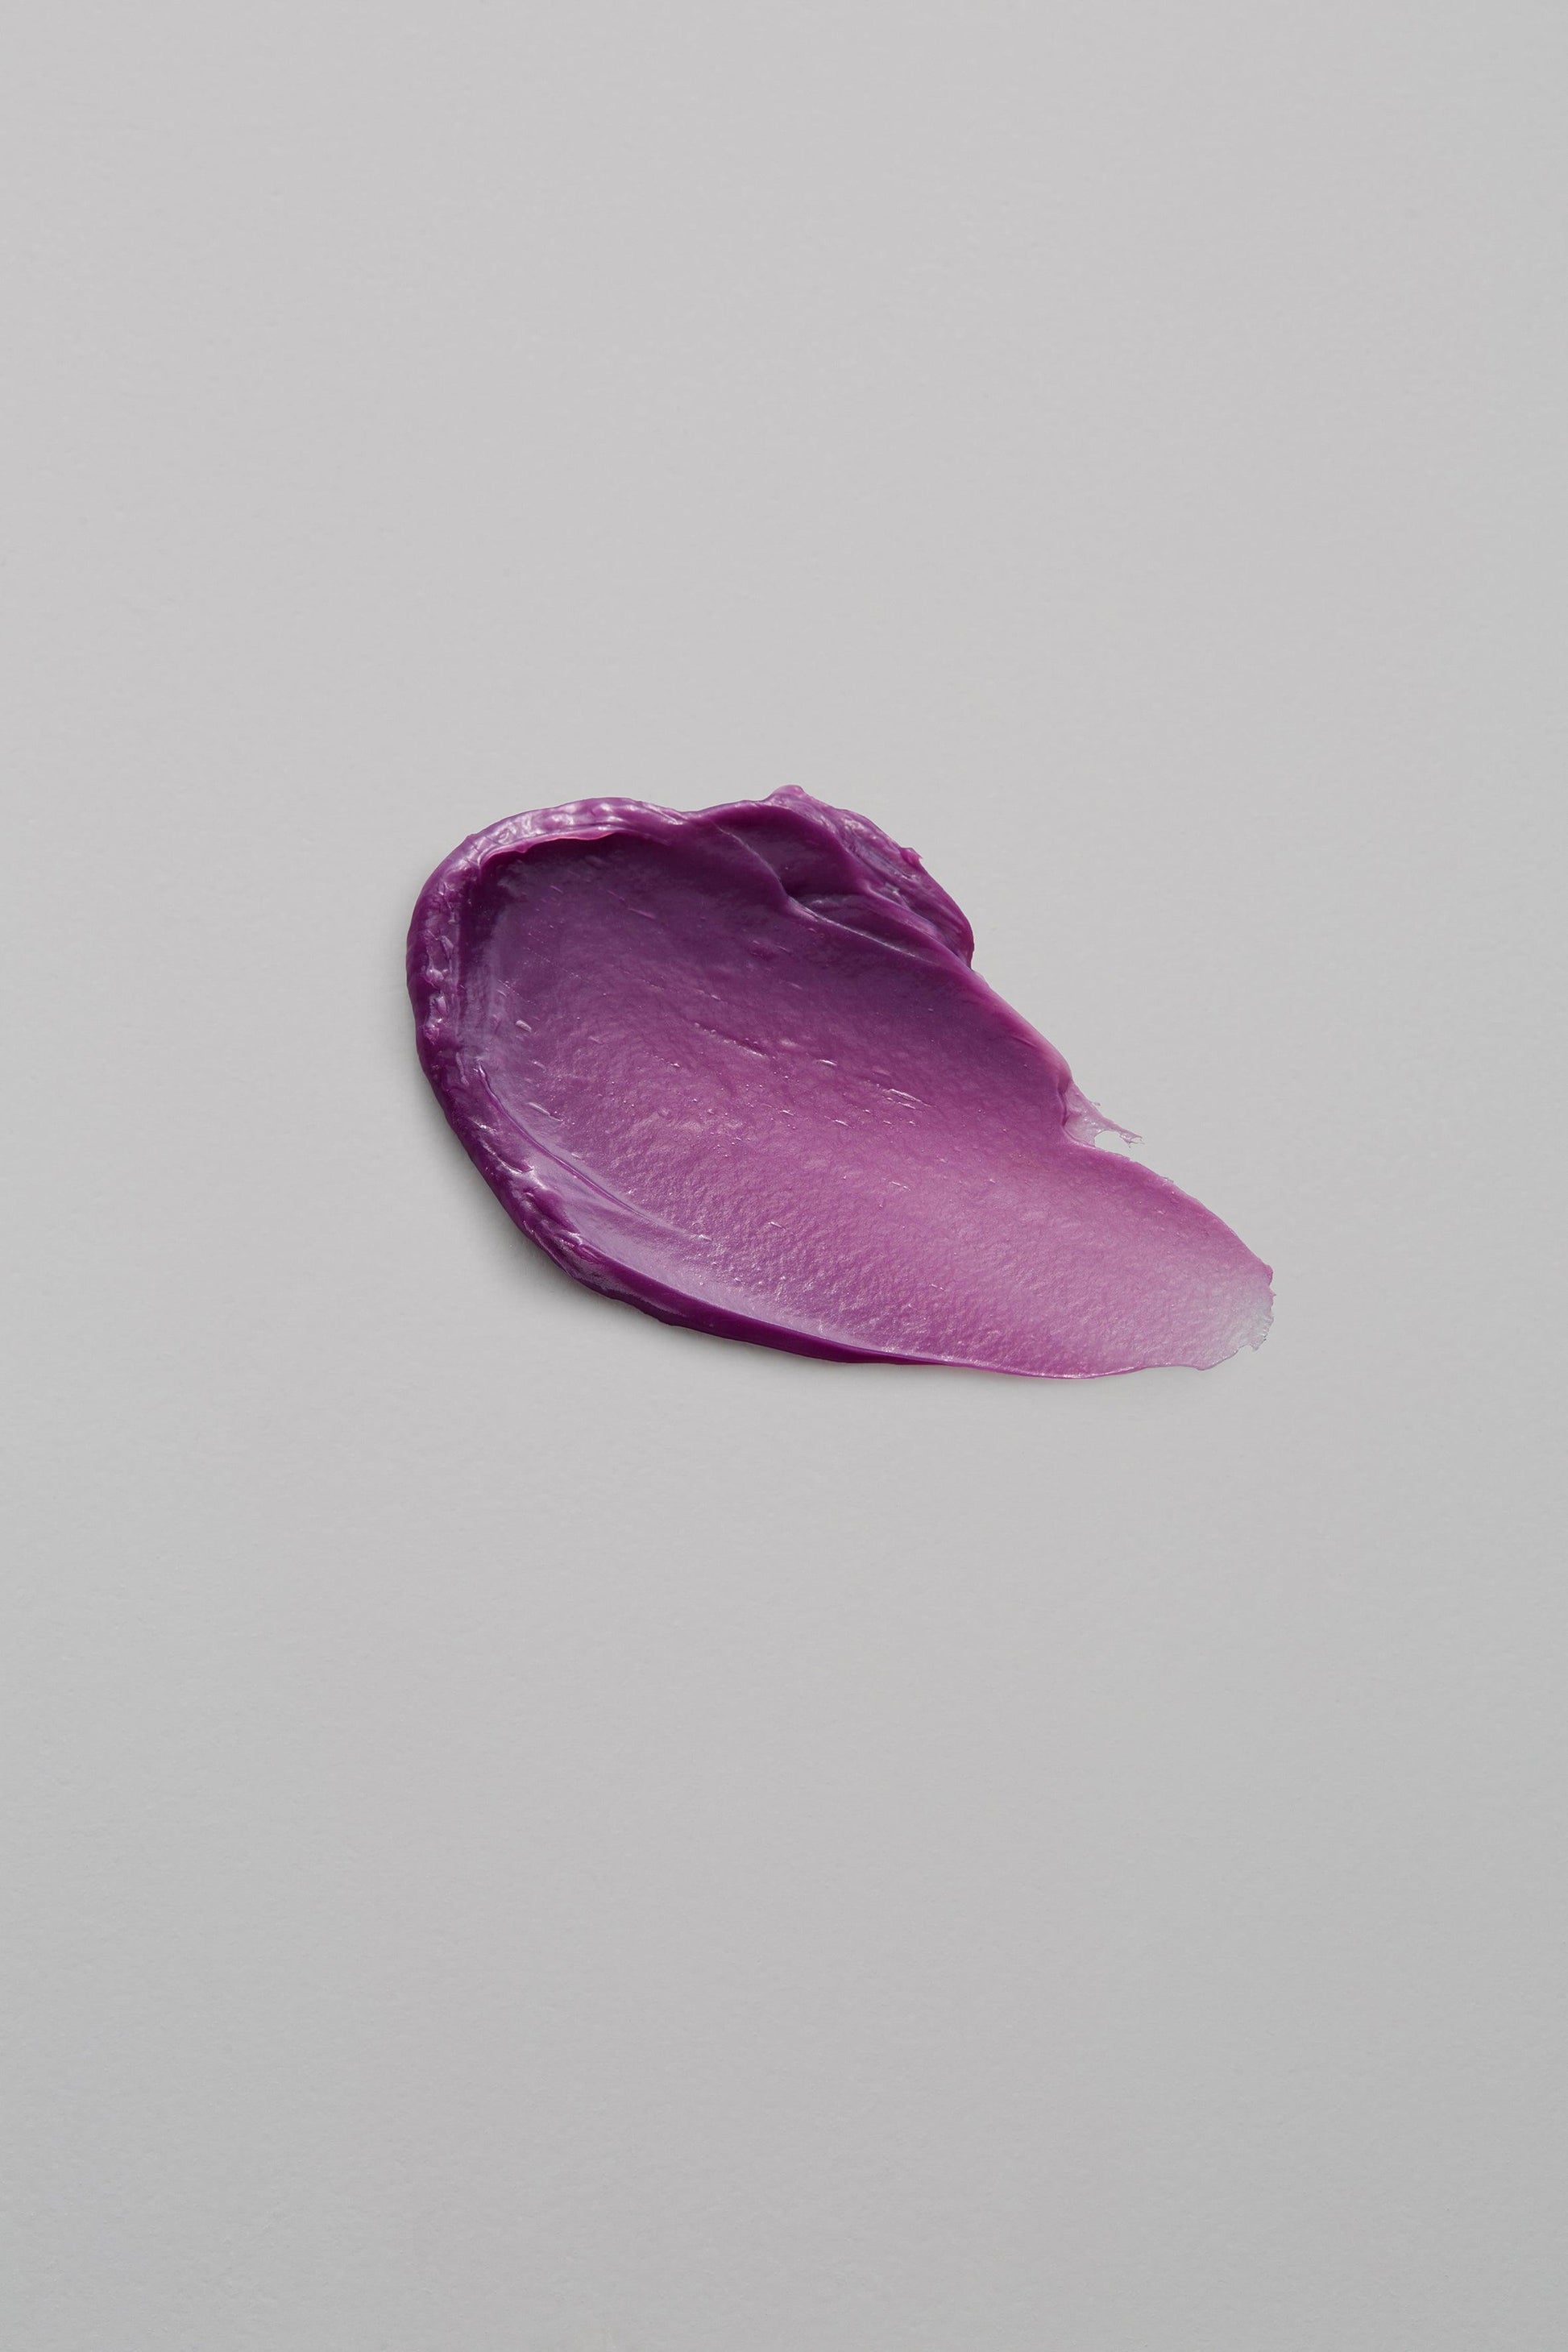 Colour Refresh Lavender - The Coloroom 